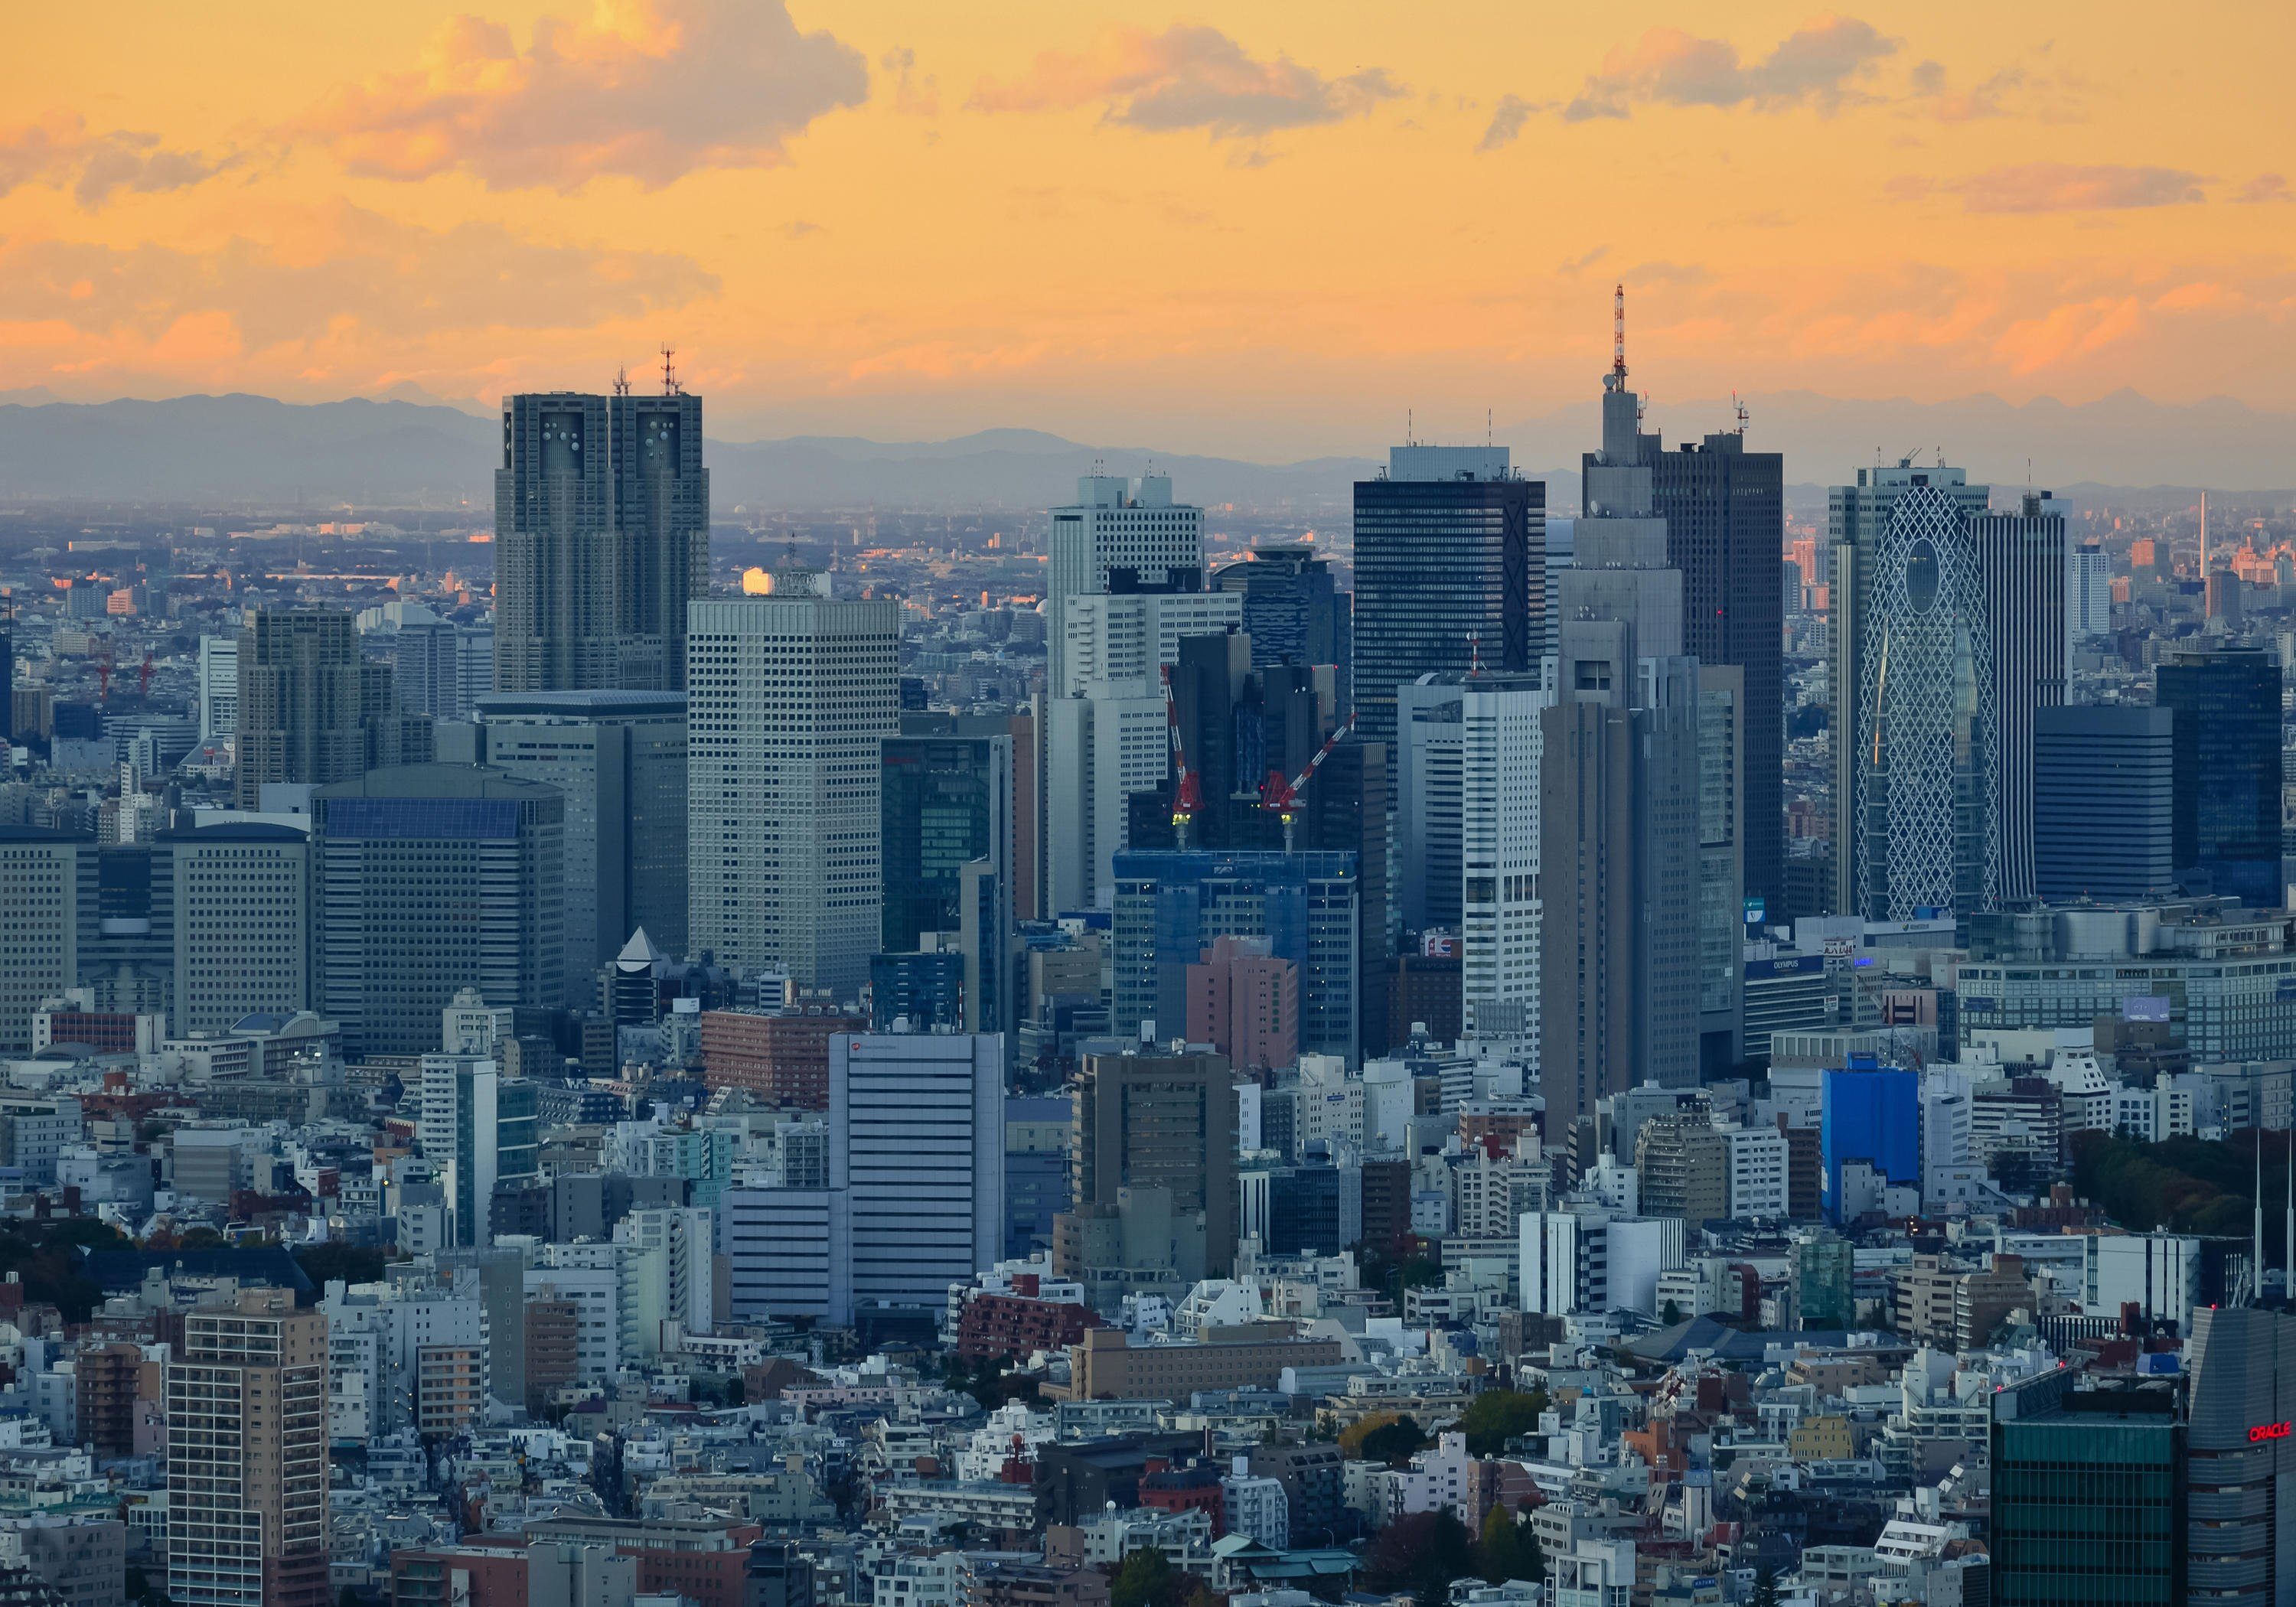 wandmotiv24 Fototapete Japan Tokyo Skyline, glatt, Wandtapete, Motivtapete, matt, Vliestapete